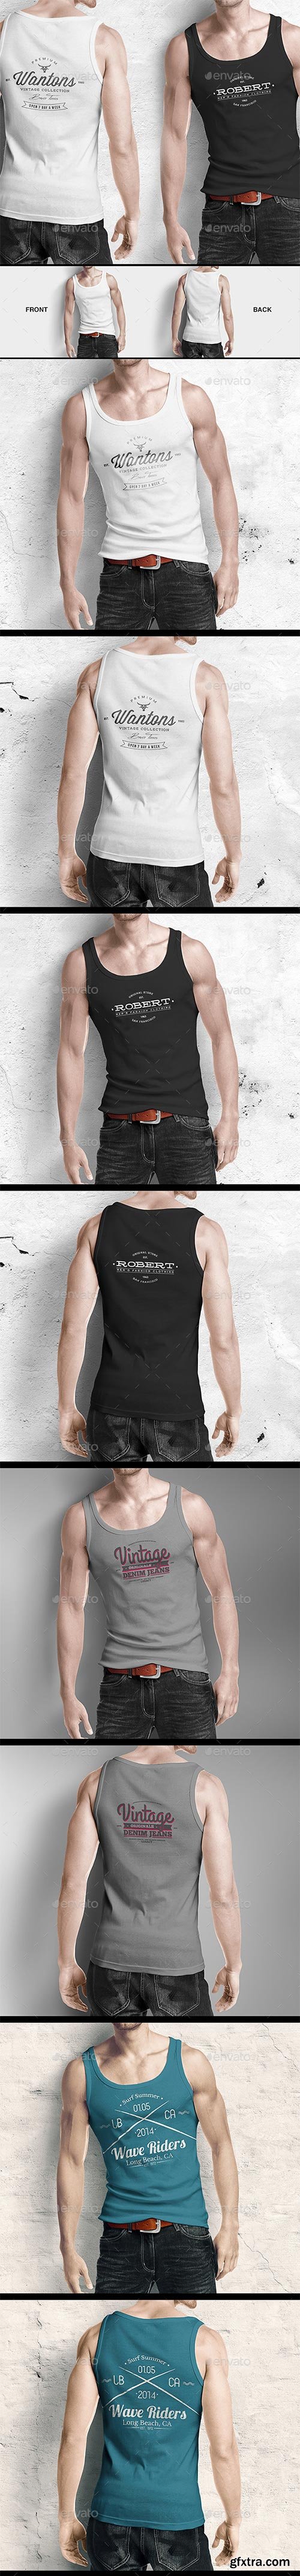 GraphicRiver - Man Tank Shirt Mock-up